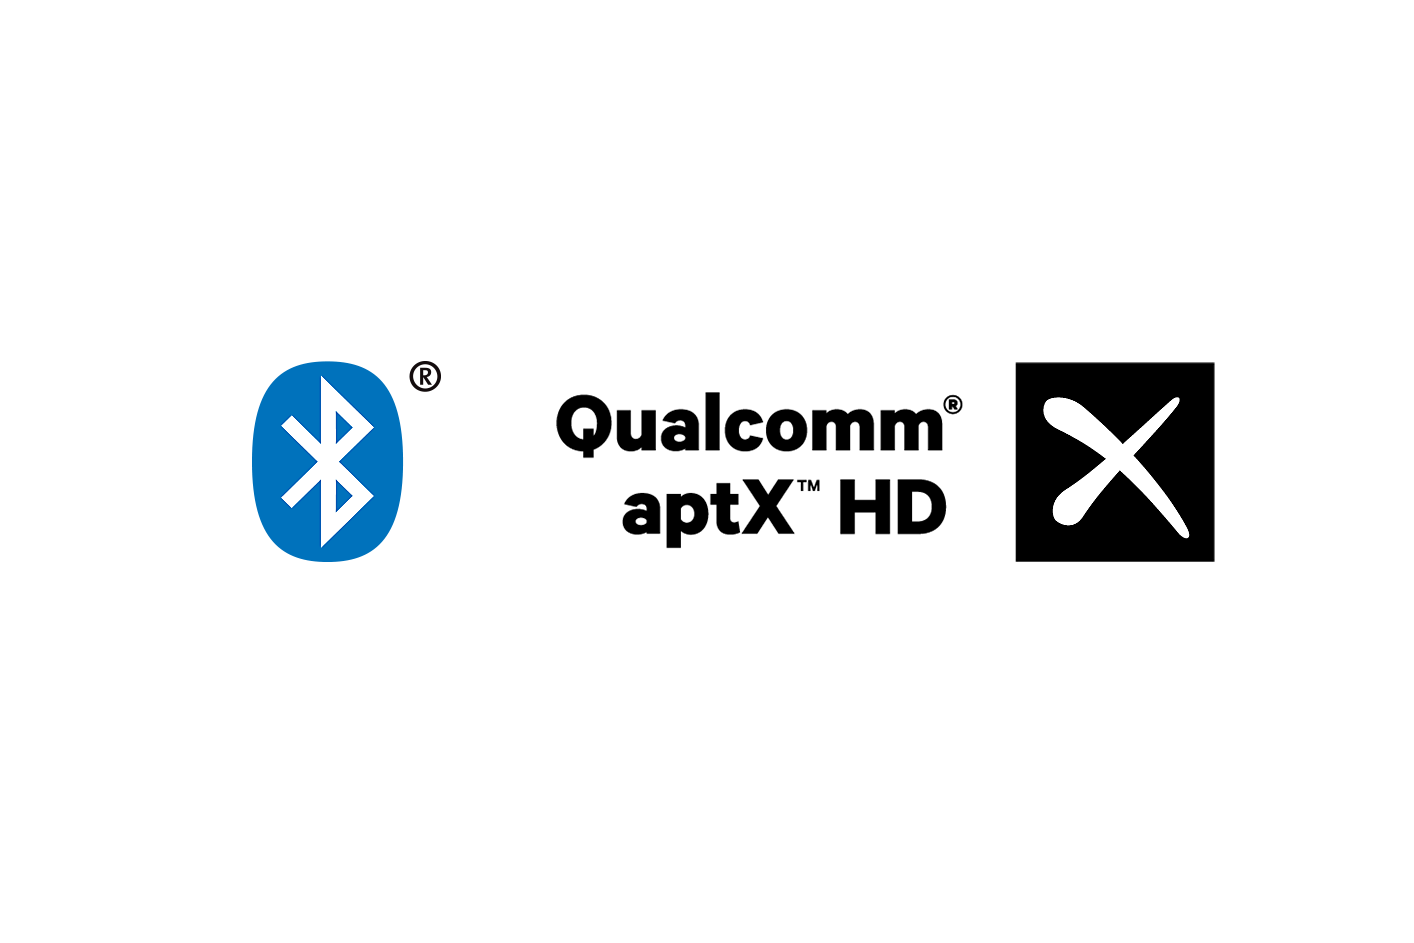 Bluetooth and Qualcomm aptX HD logos.